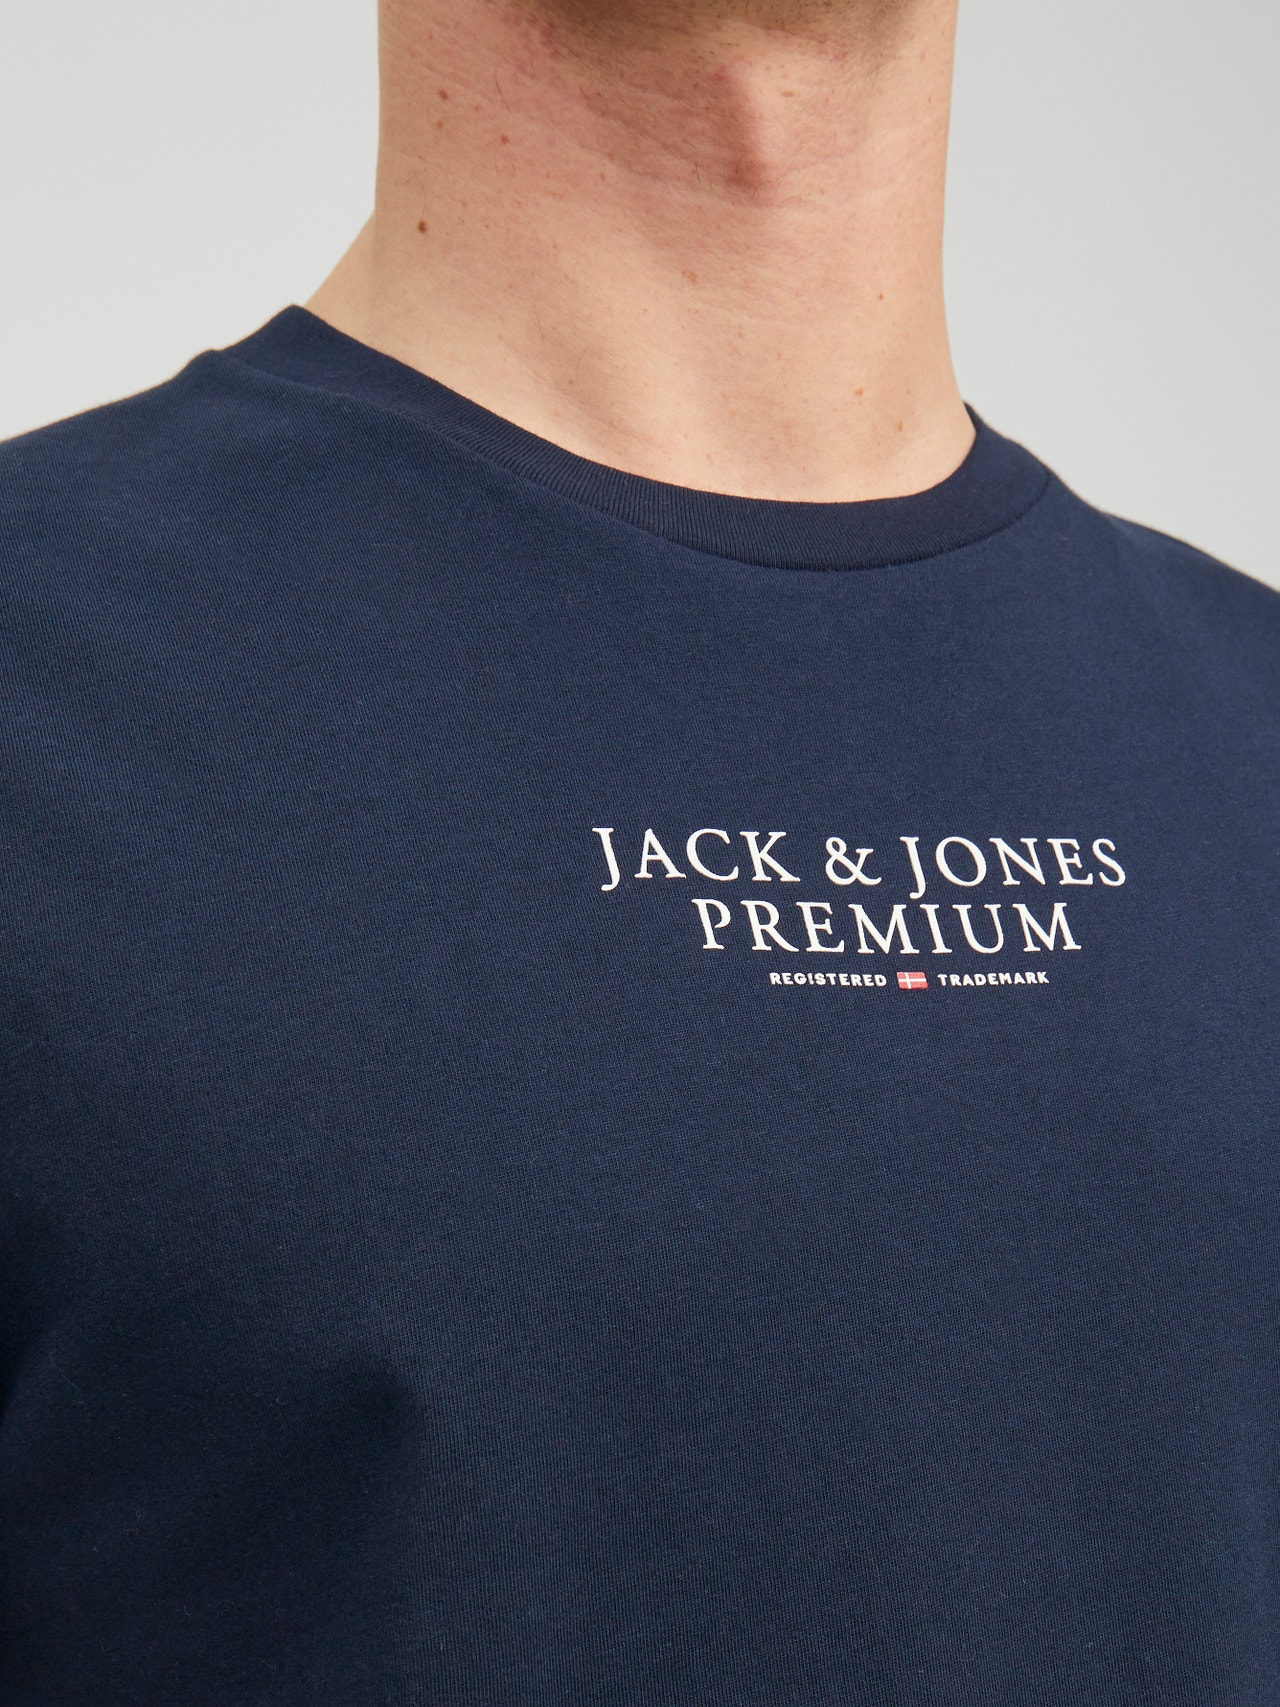 Jack & Jones Camiseta Logotipo Cuello redondo -Navy Blazer - 12217167